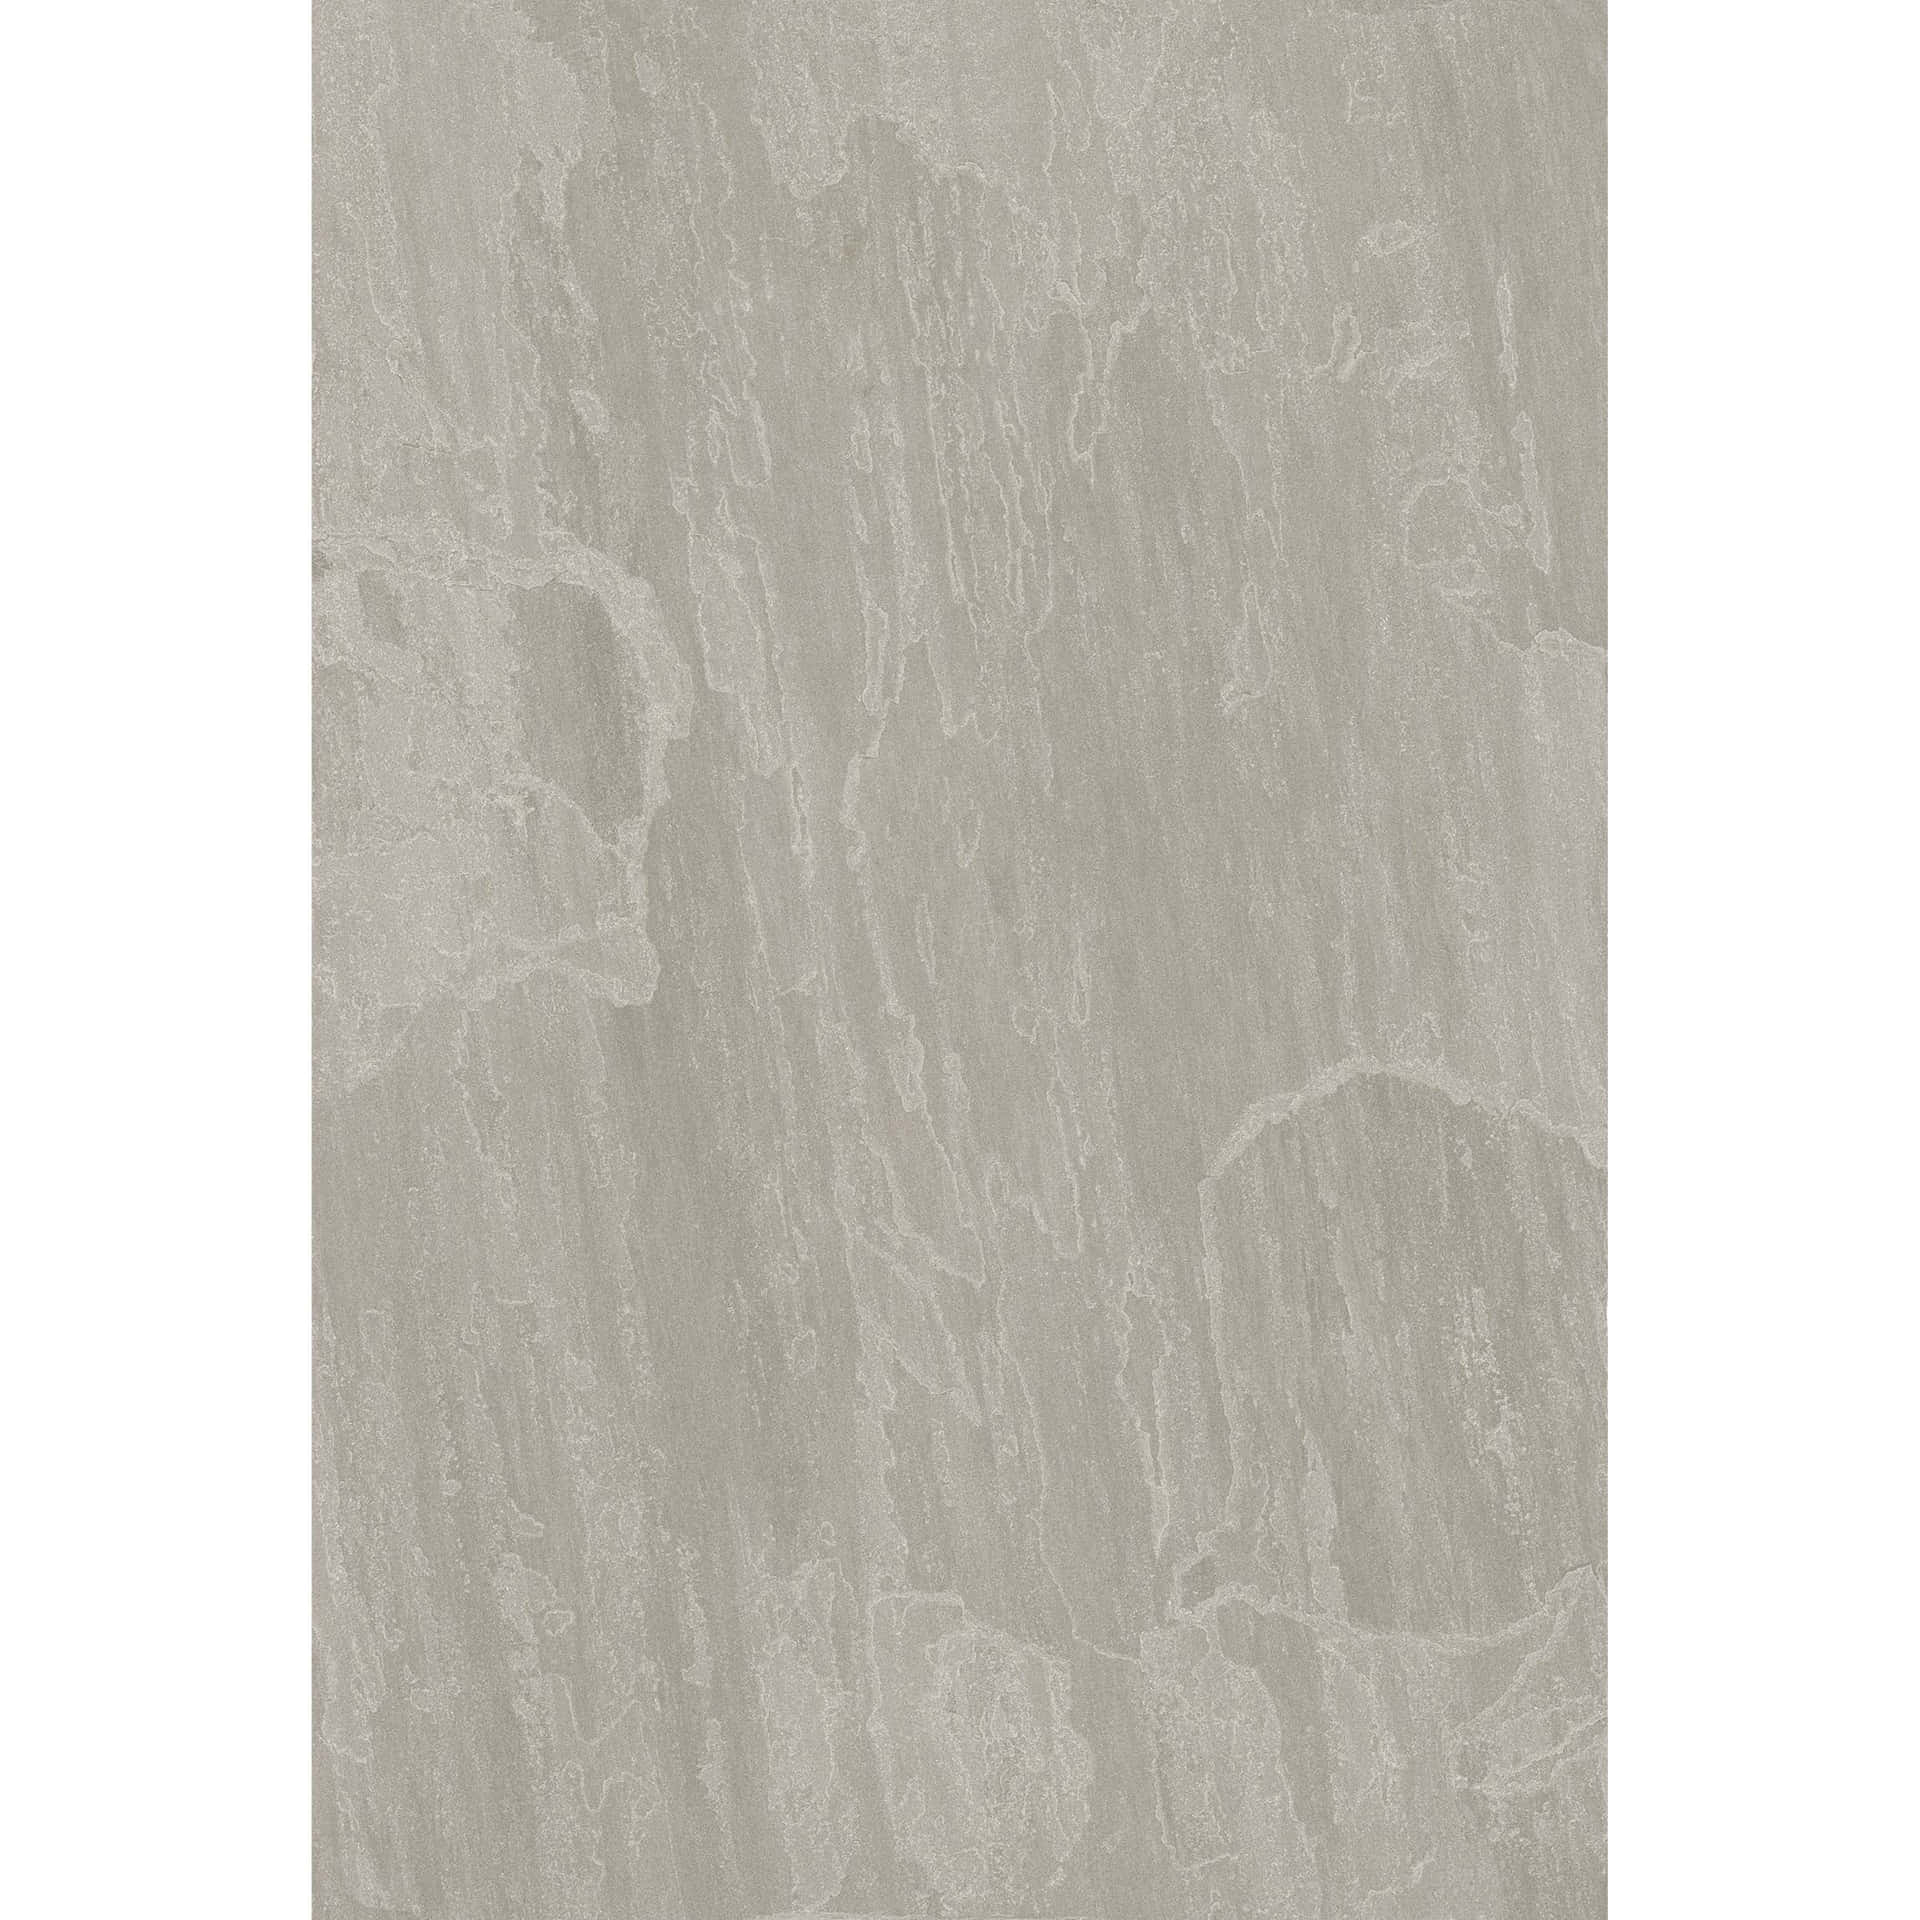 Grey Marble Ceramic Tile Texture Wallpaper